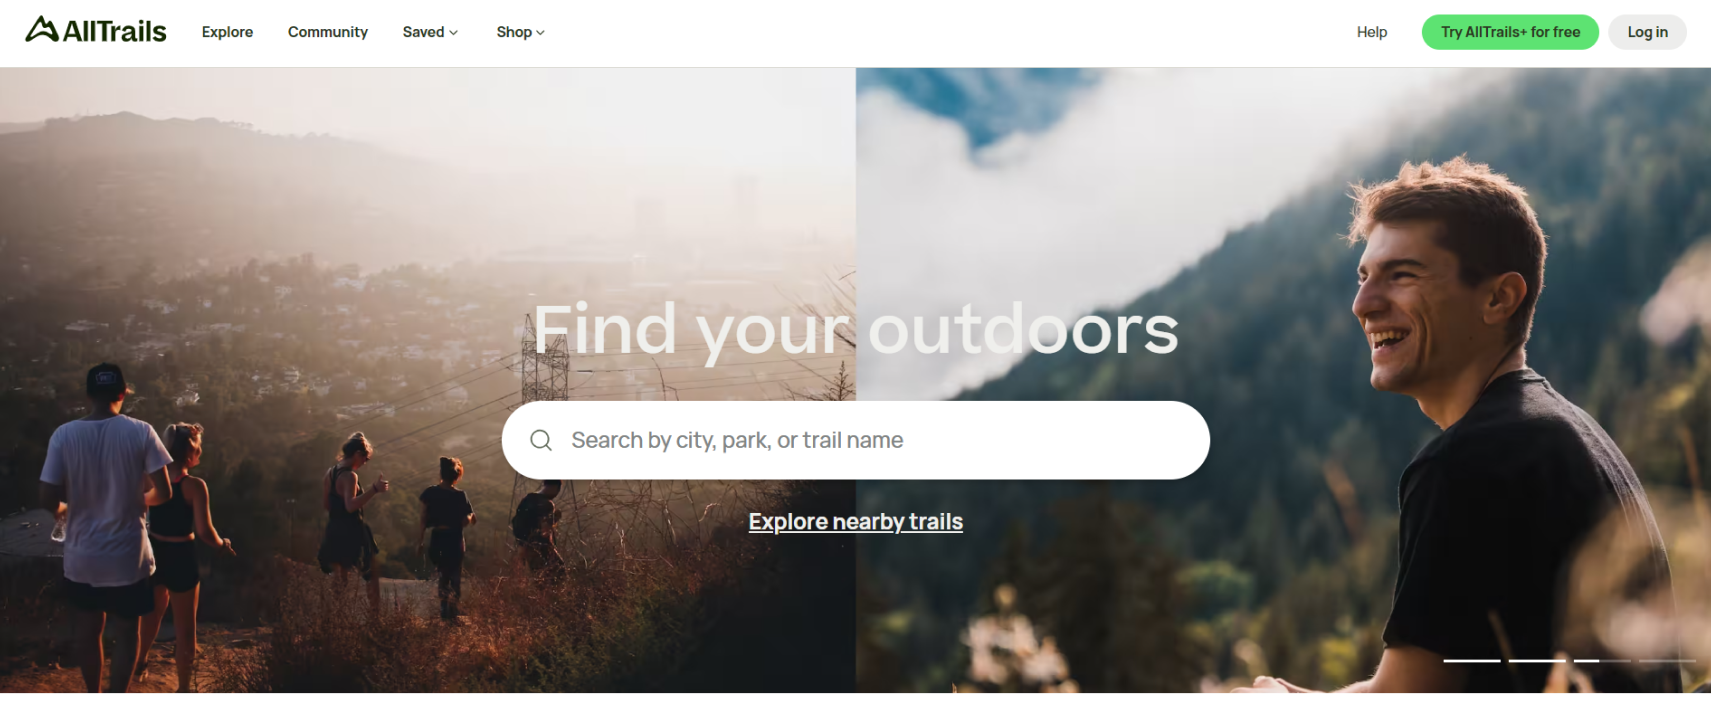 Web app idea #20_Outdoor Adventure Web App